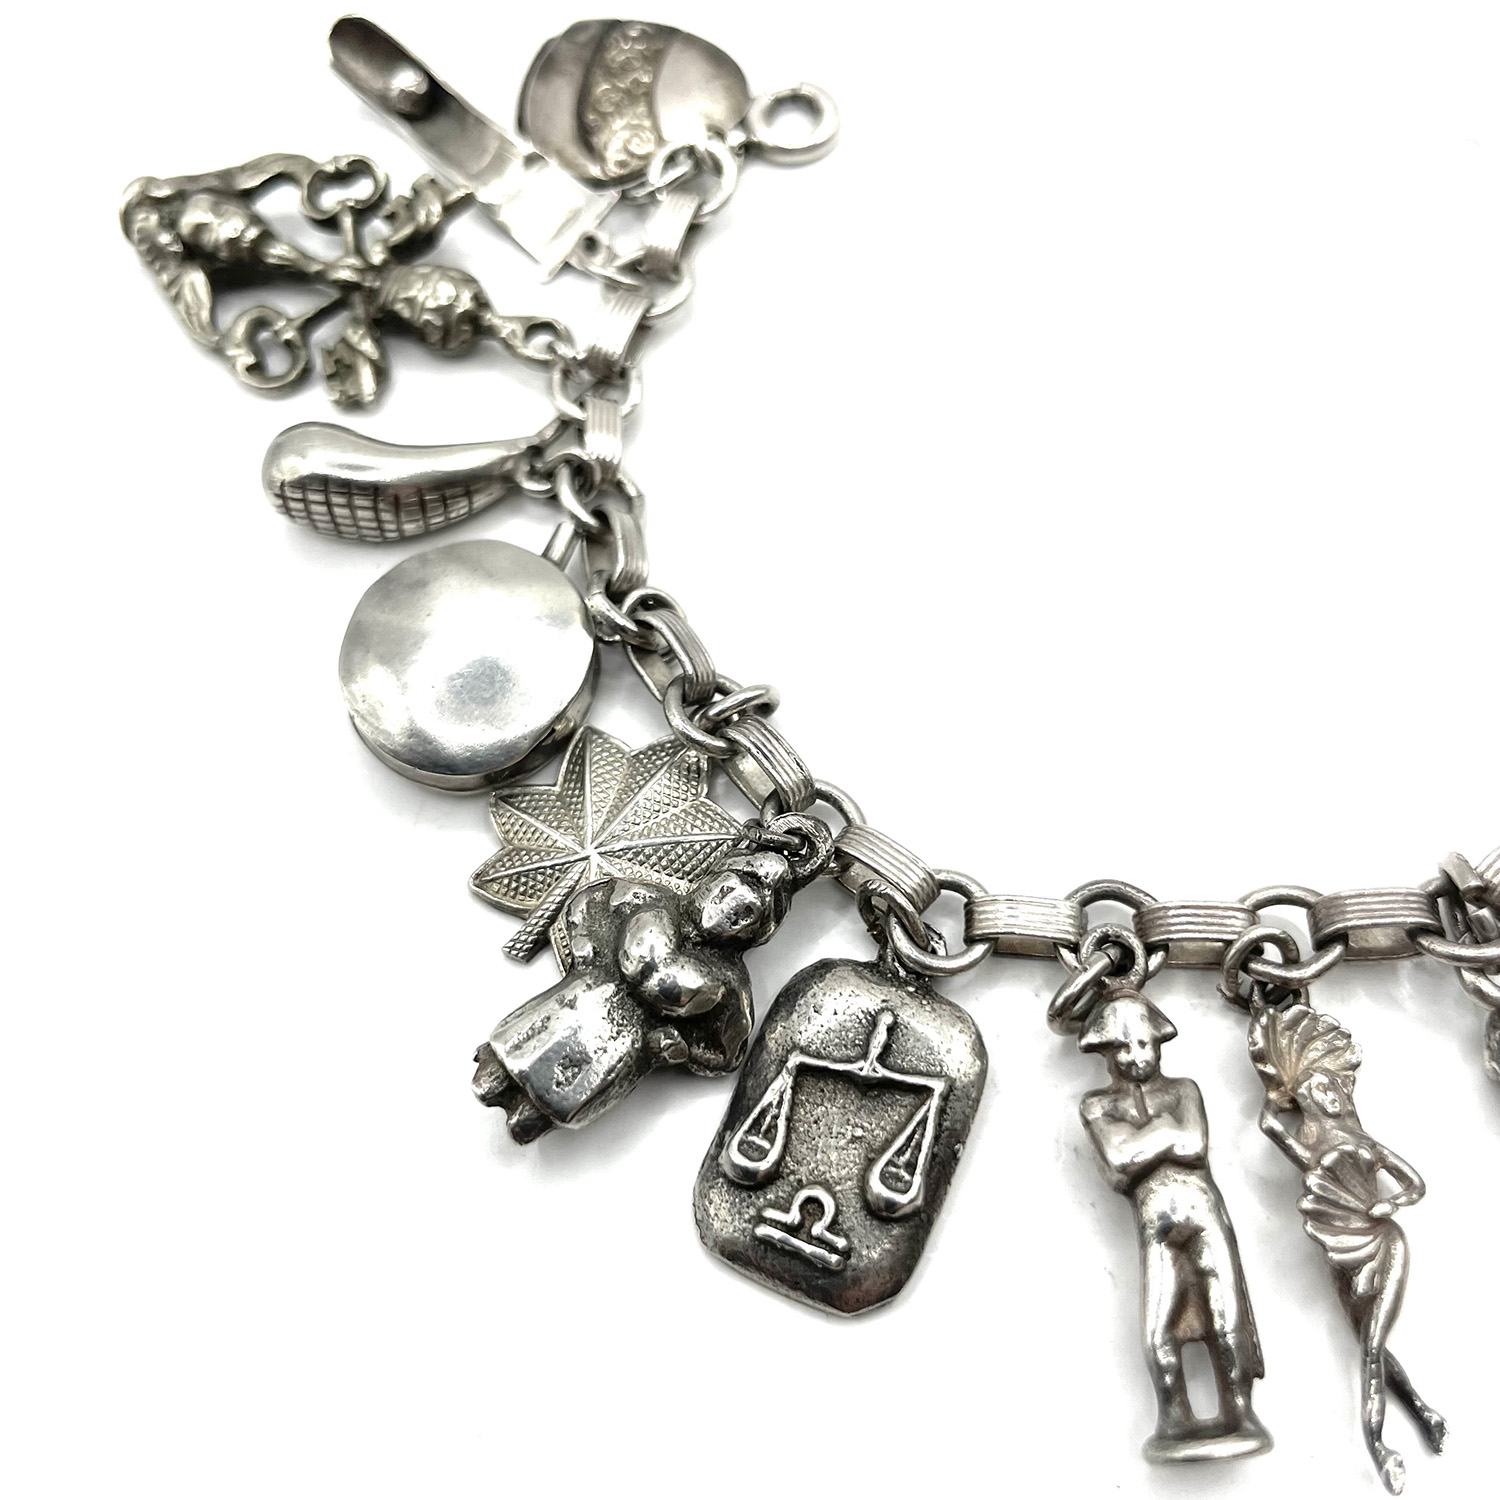 1940s sterling silver charm bracelet